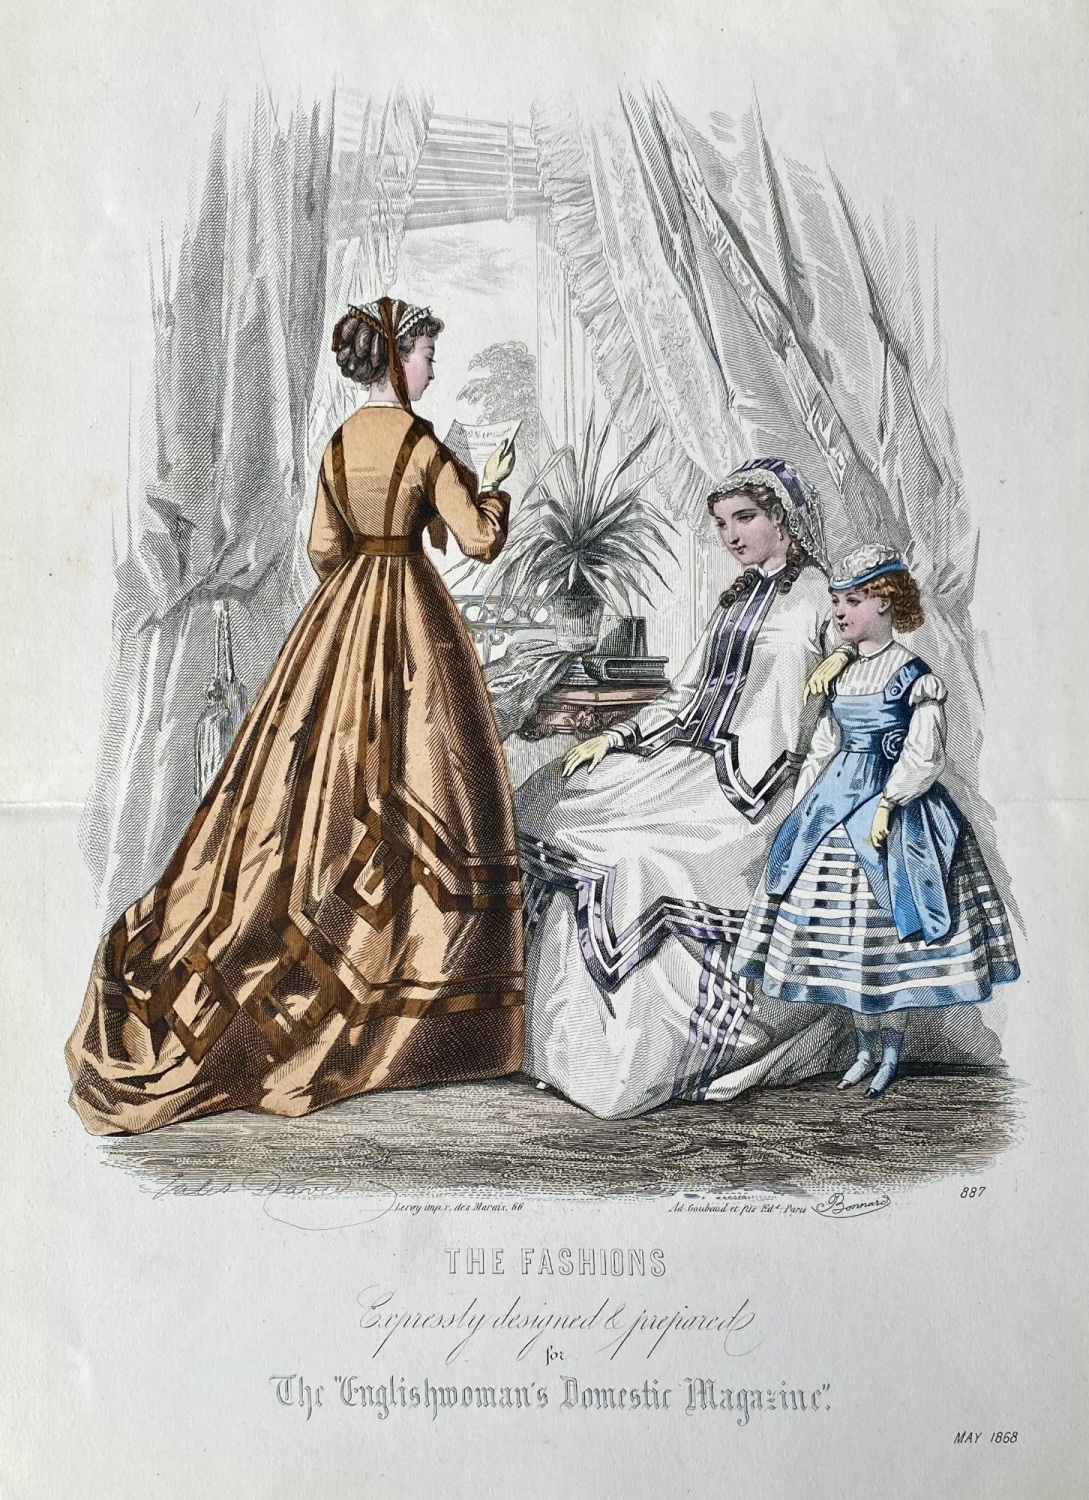 The Fashions , Expressly designed & prepared for the Englishwoman's Domesti